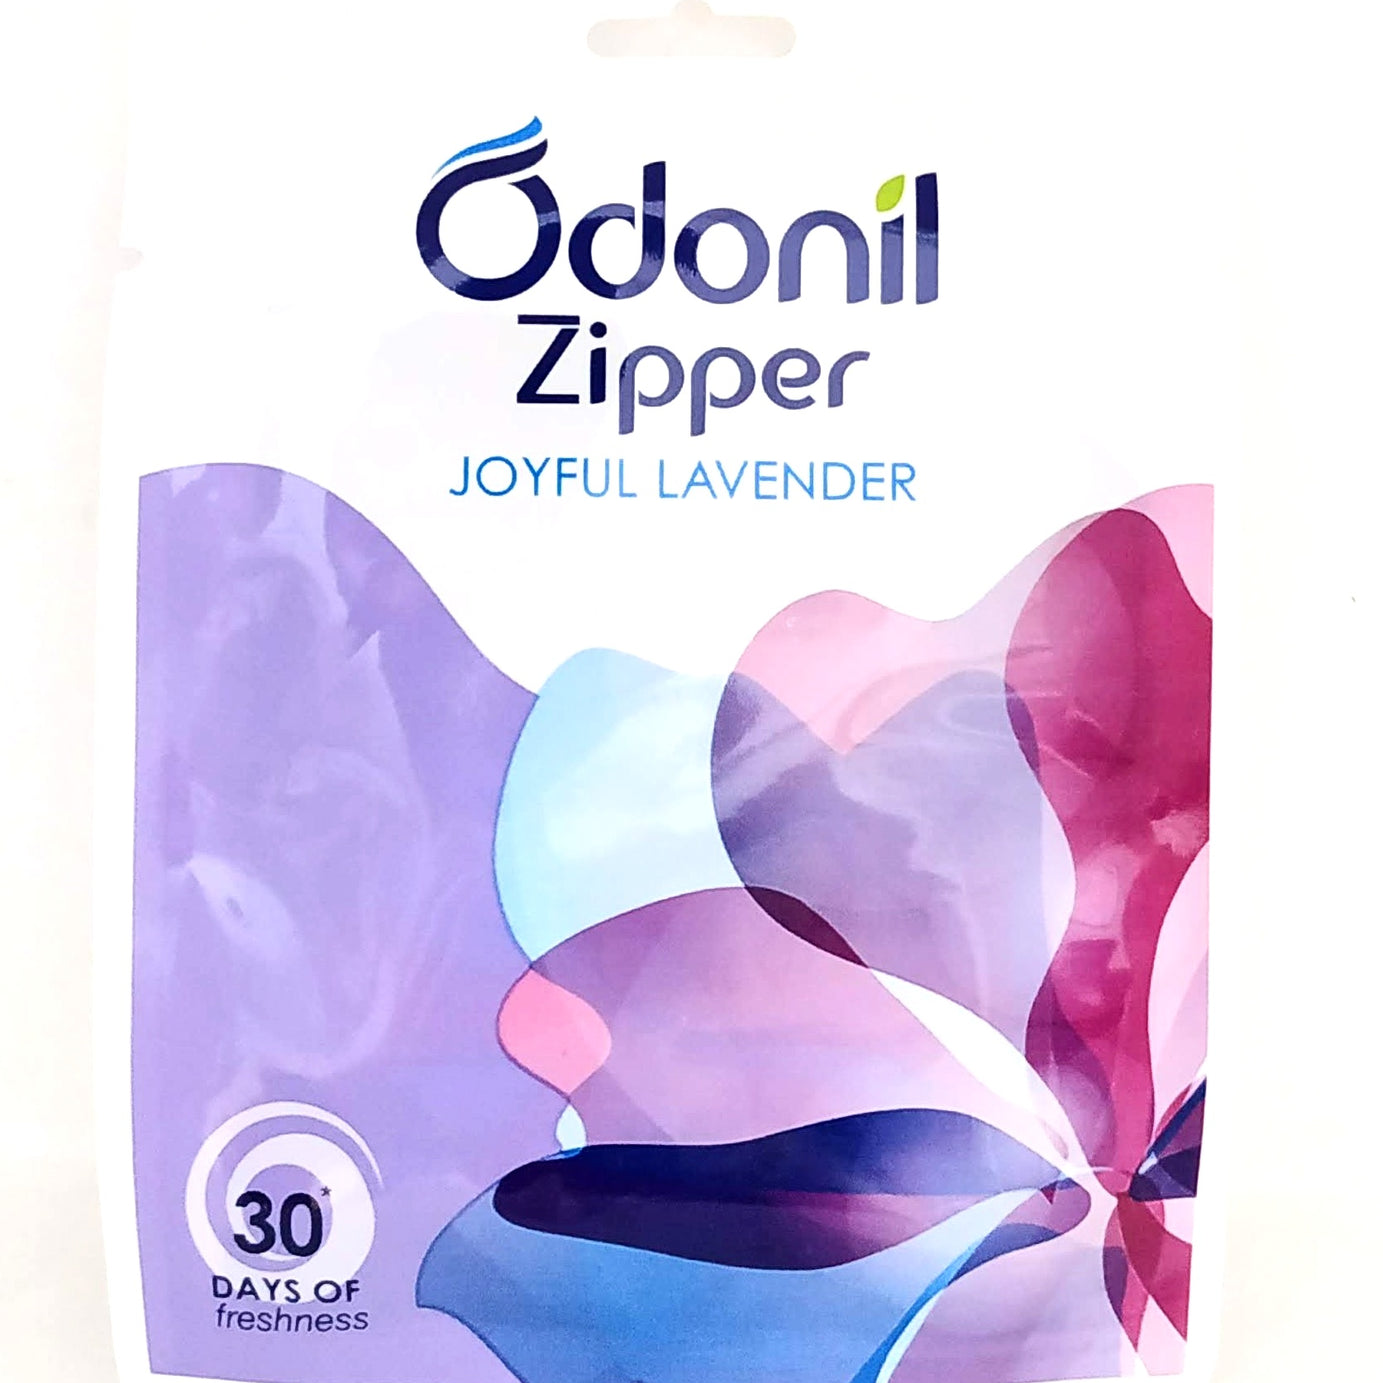 Shop Odonil Zipper - Joyful Lavender at price 55.00 from Dabur Online - Ayush Care